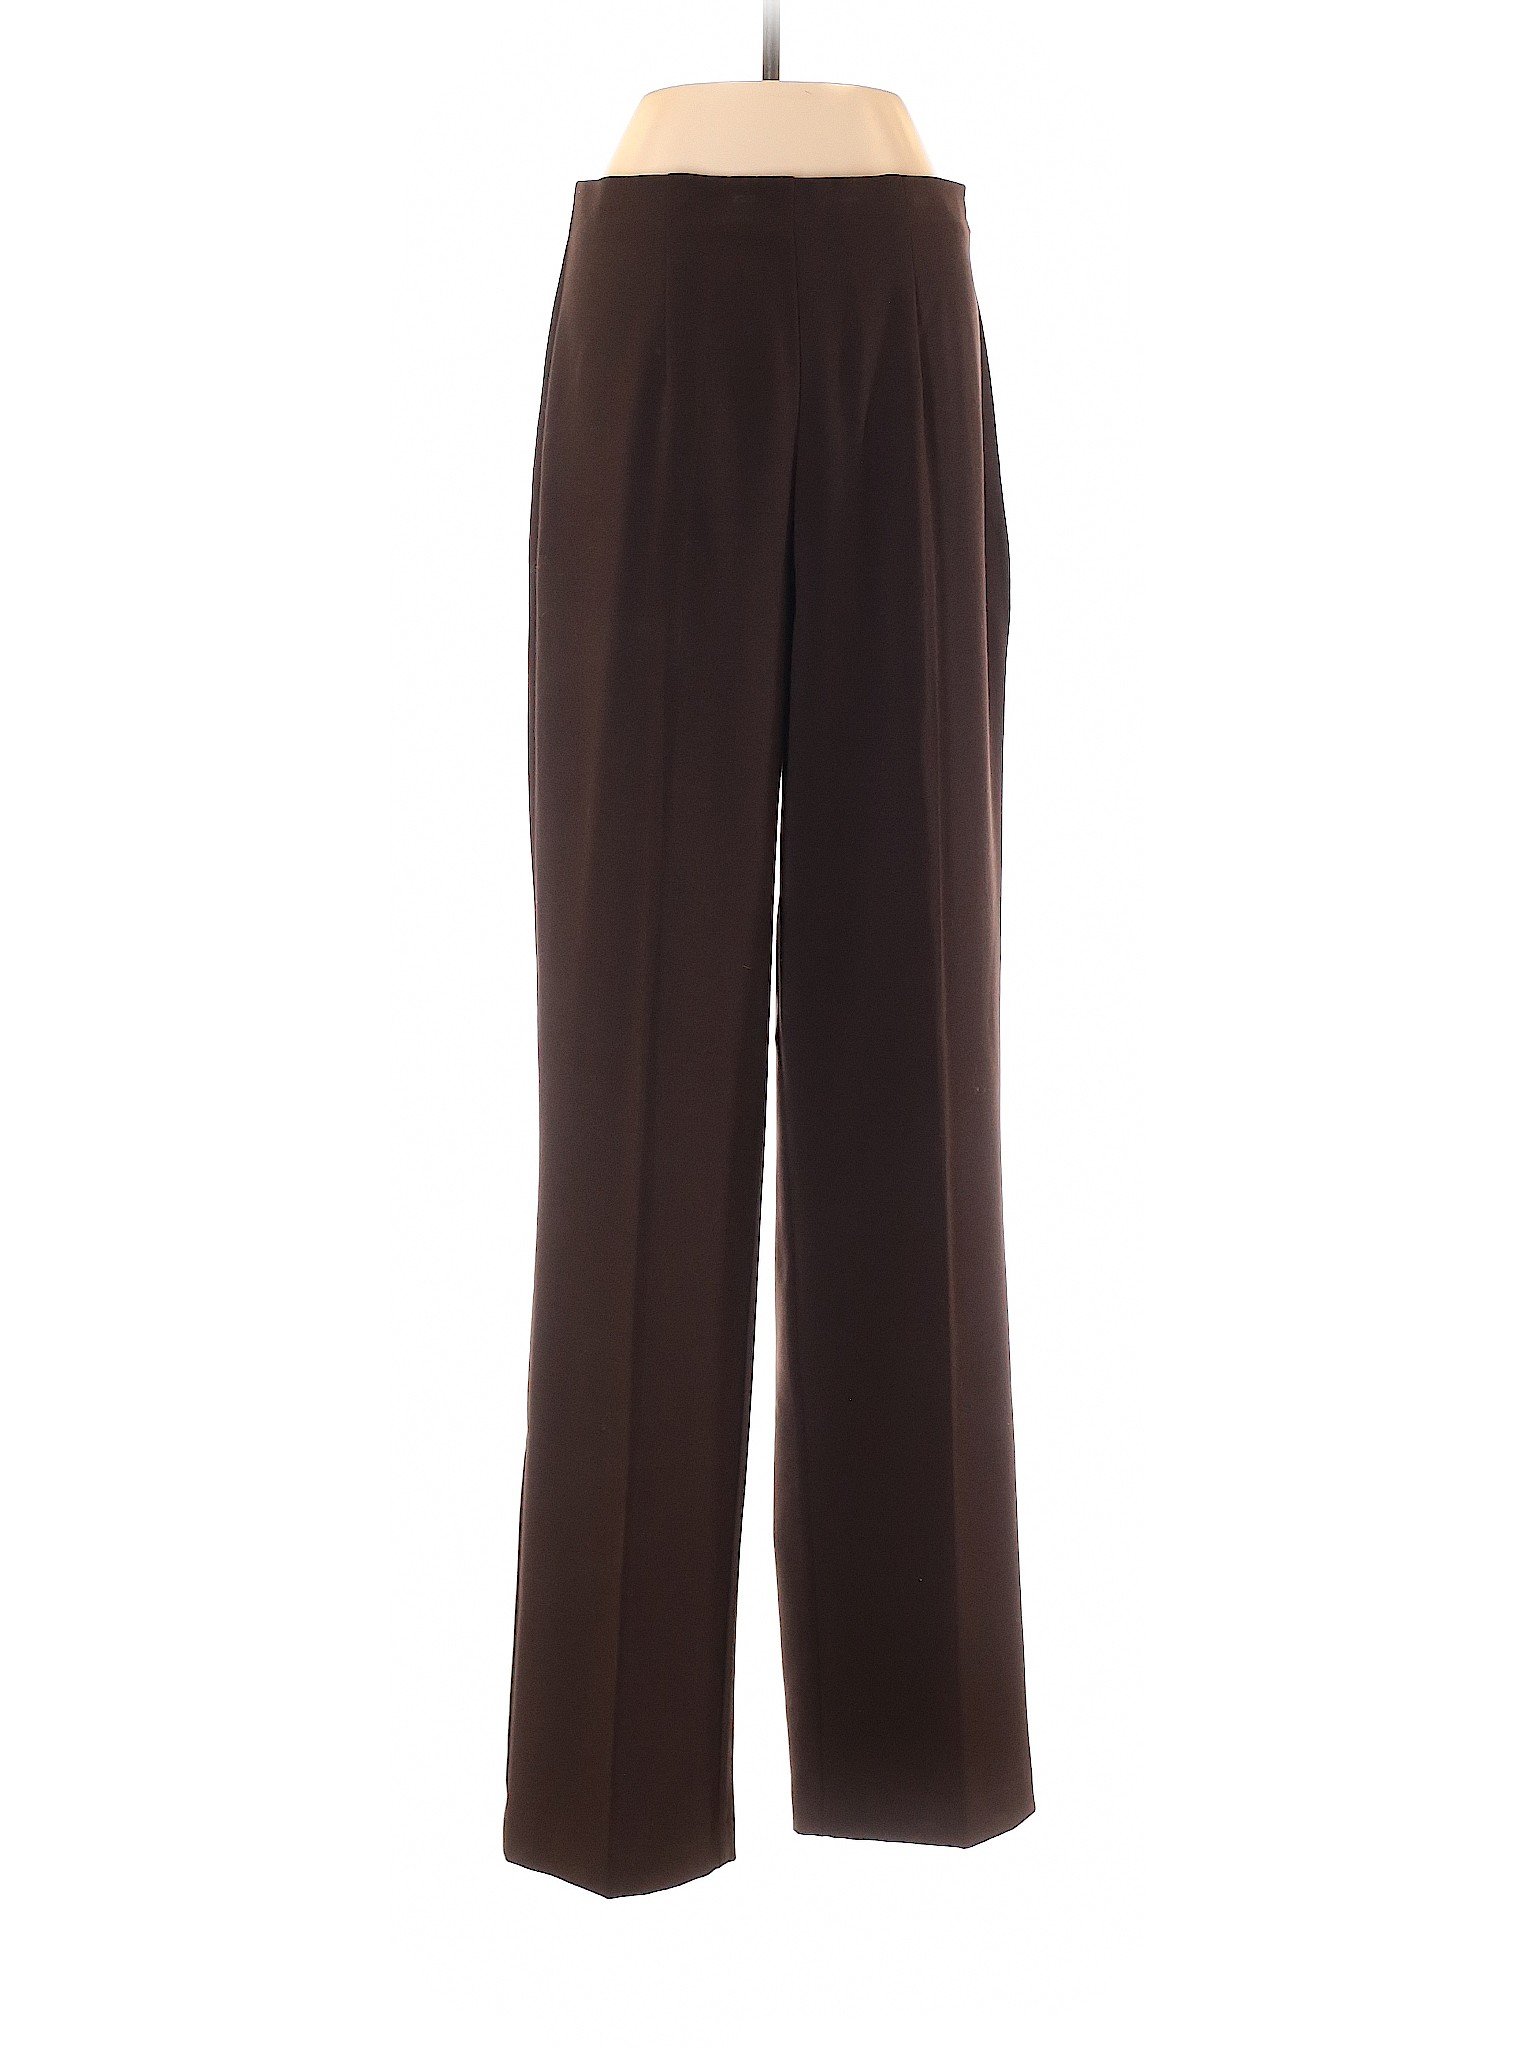 Tribella Solid Brown Dress Pants Size 4 - 81% off | thredUP